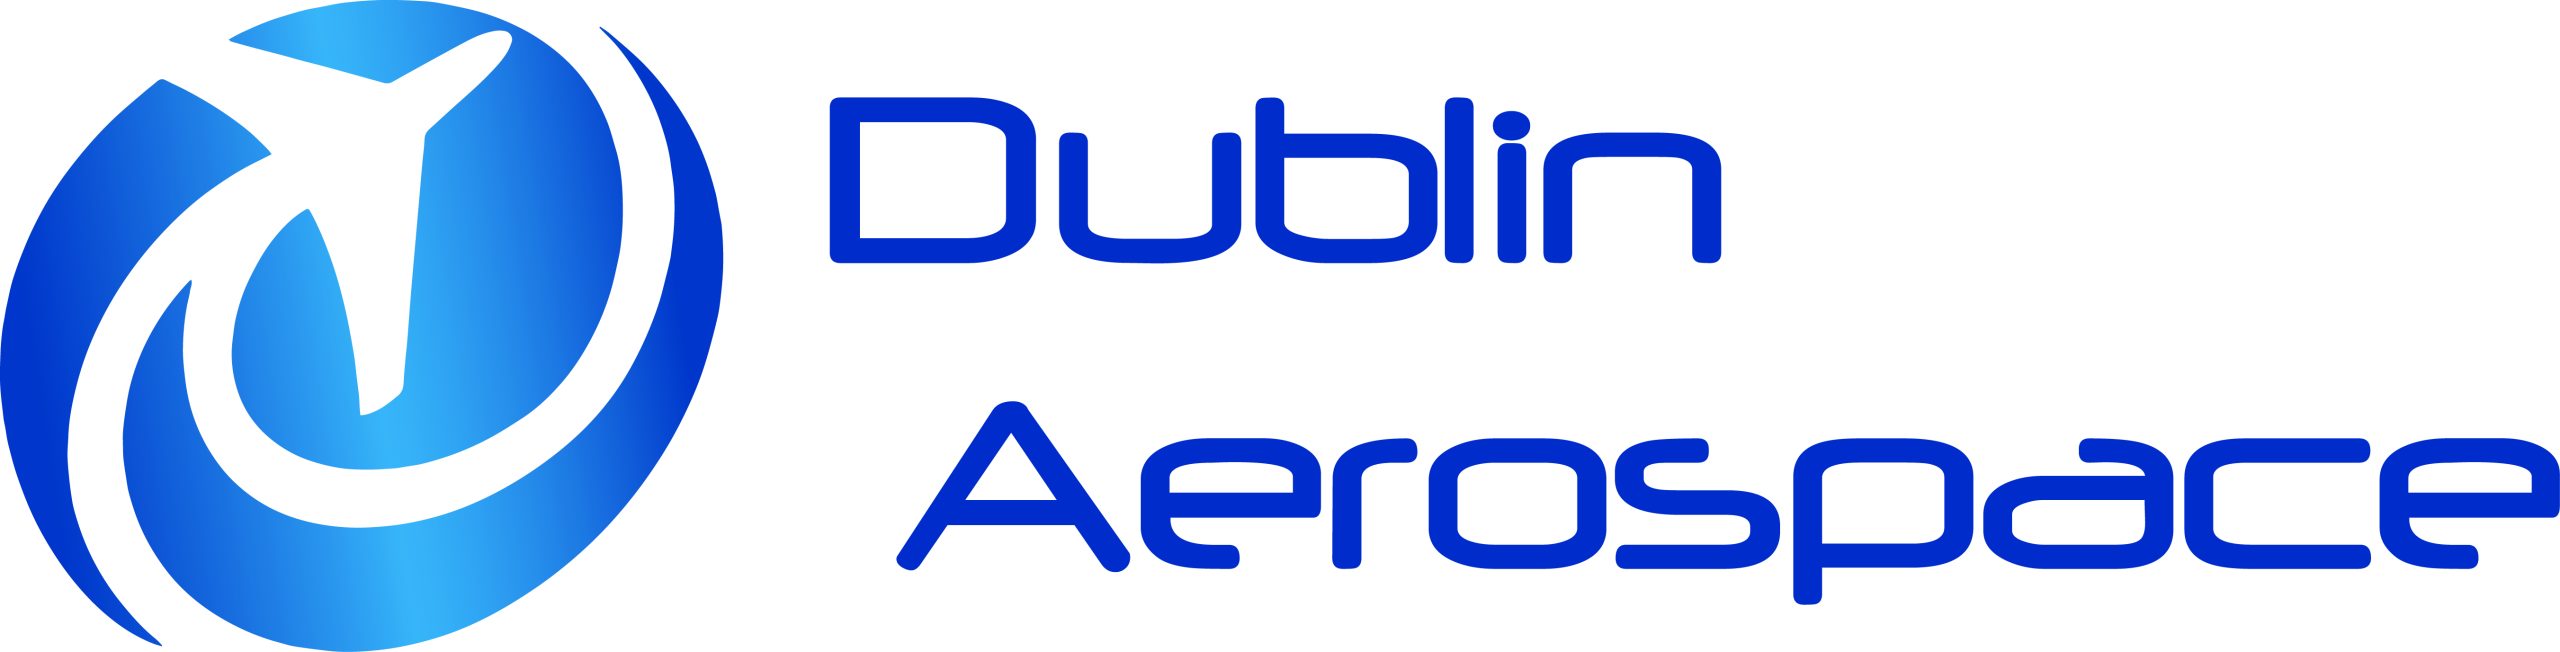 Dublin-Aerospace-Logo-1-002-scaled